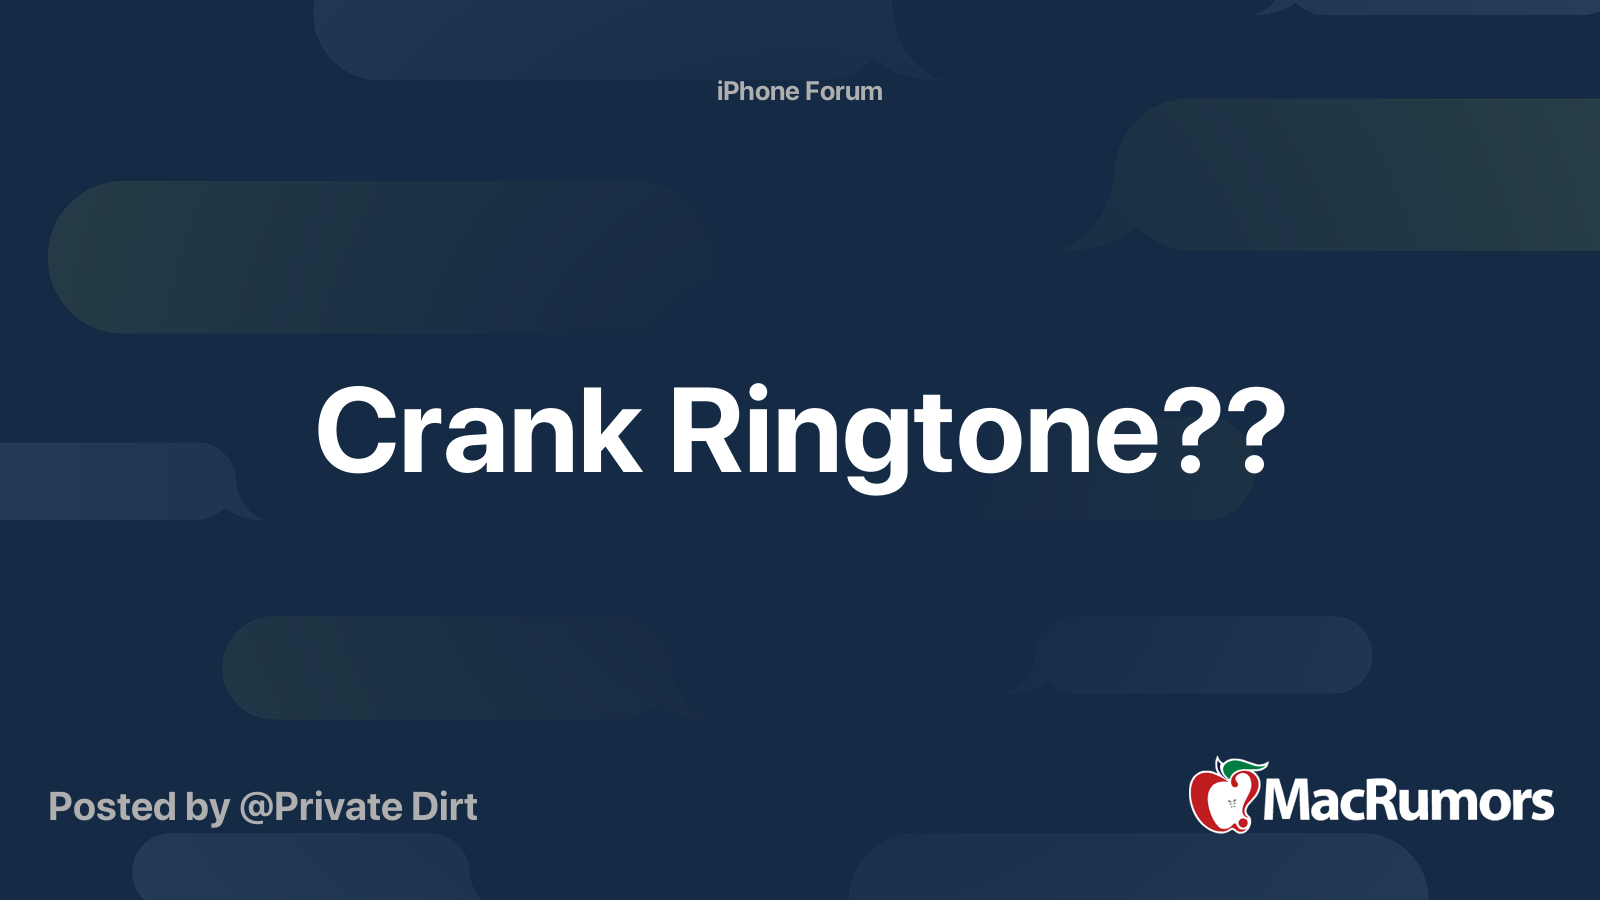 Uitgraving blaas gat Kiezen Crank Ringtone?? | MacRumors Forums